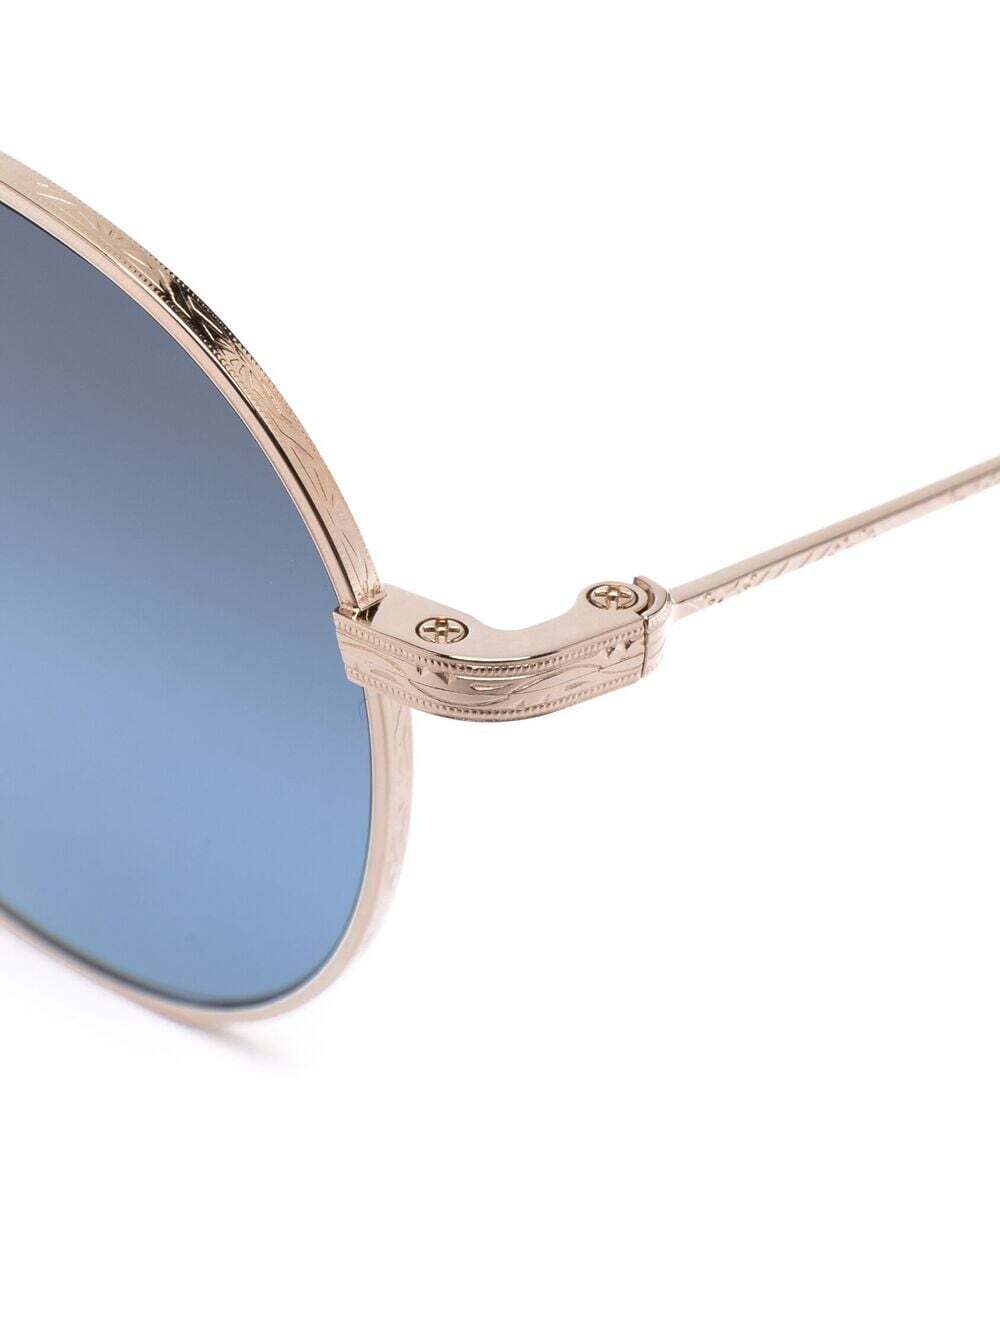 Oliver Peoples Weslie Sun round sunglasses in gold/dark azure gradient